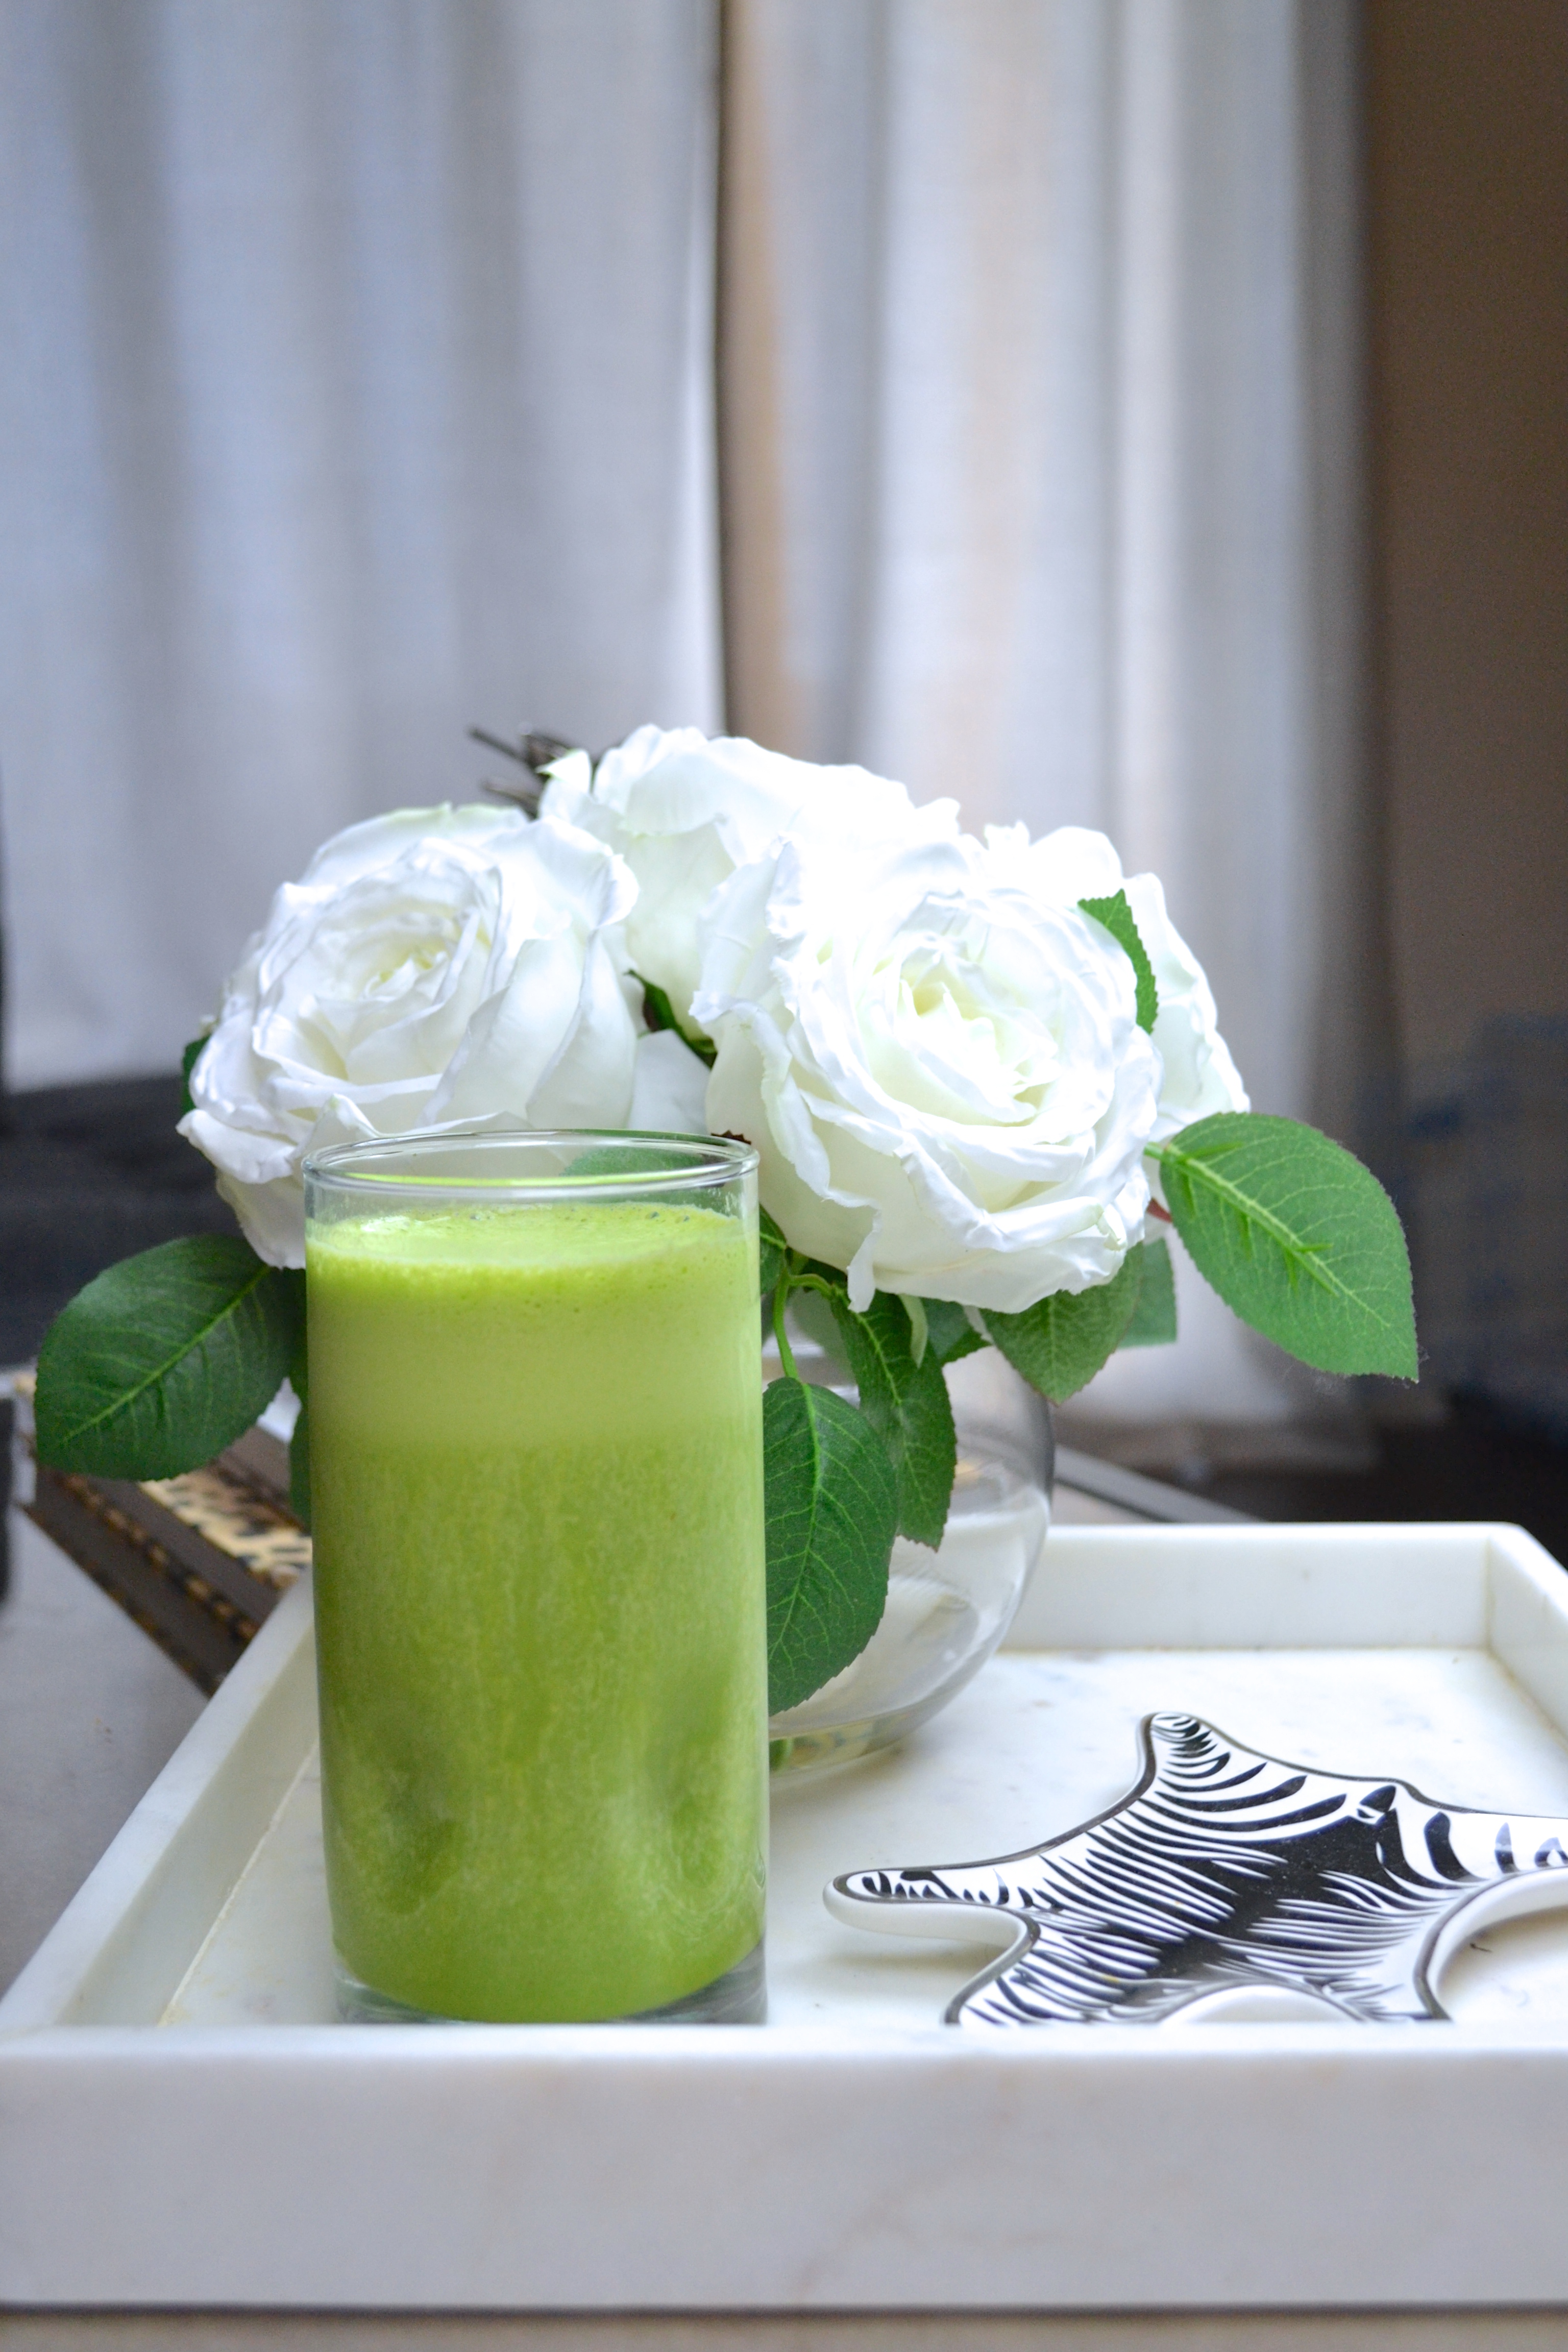 Green Smoothie |smoothie recipe| glowing smoothie, healthy, vegan, morning routine, morning, breakfast